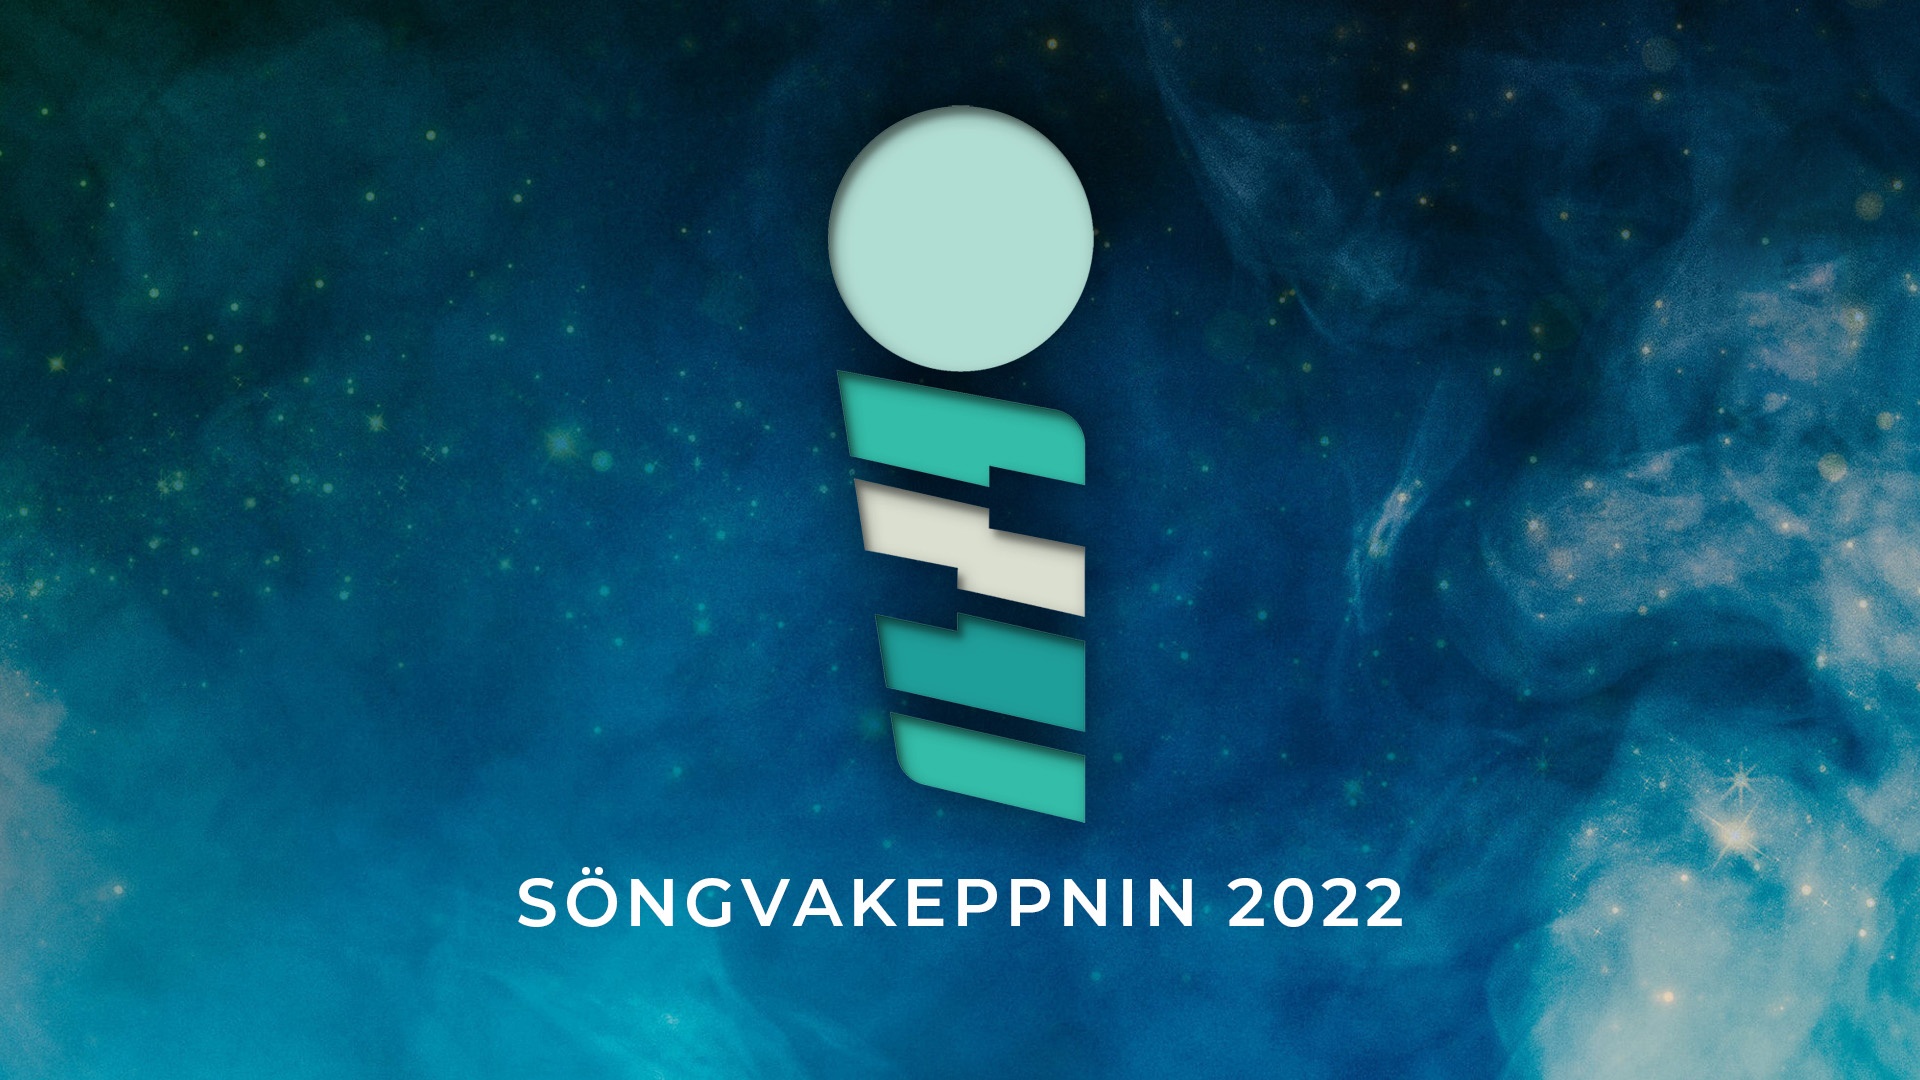 Songvakeppnin, Islandia, logo